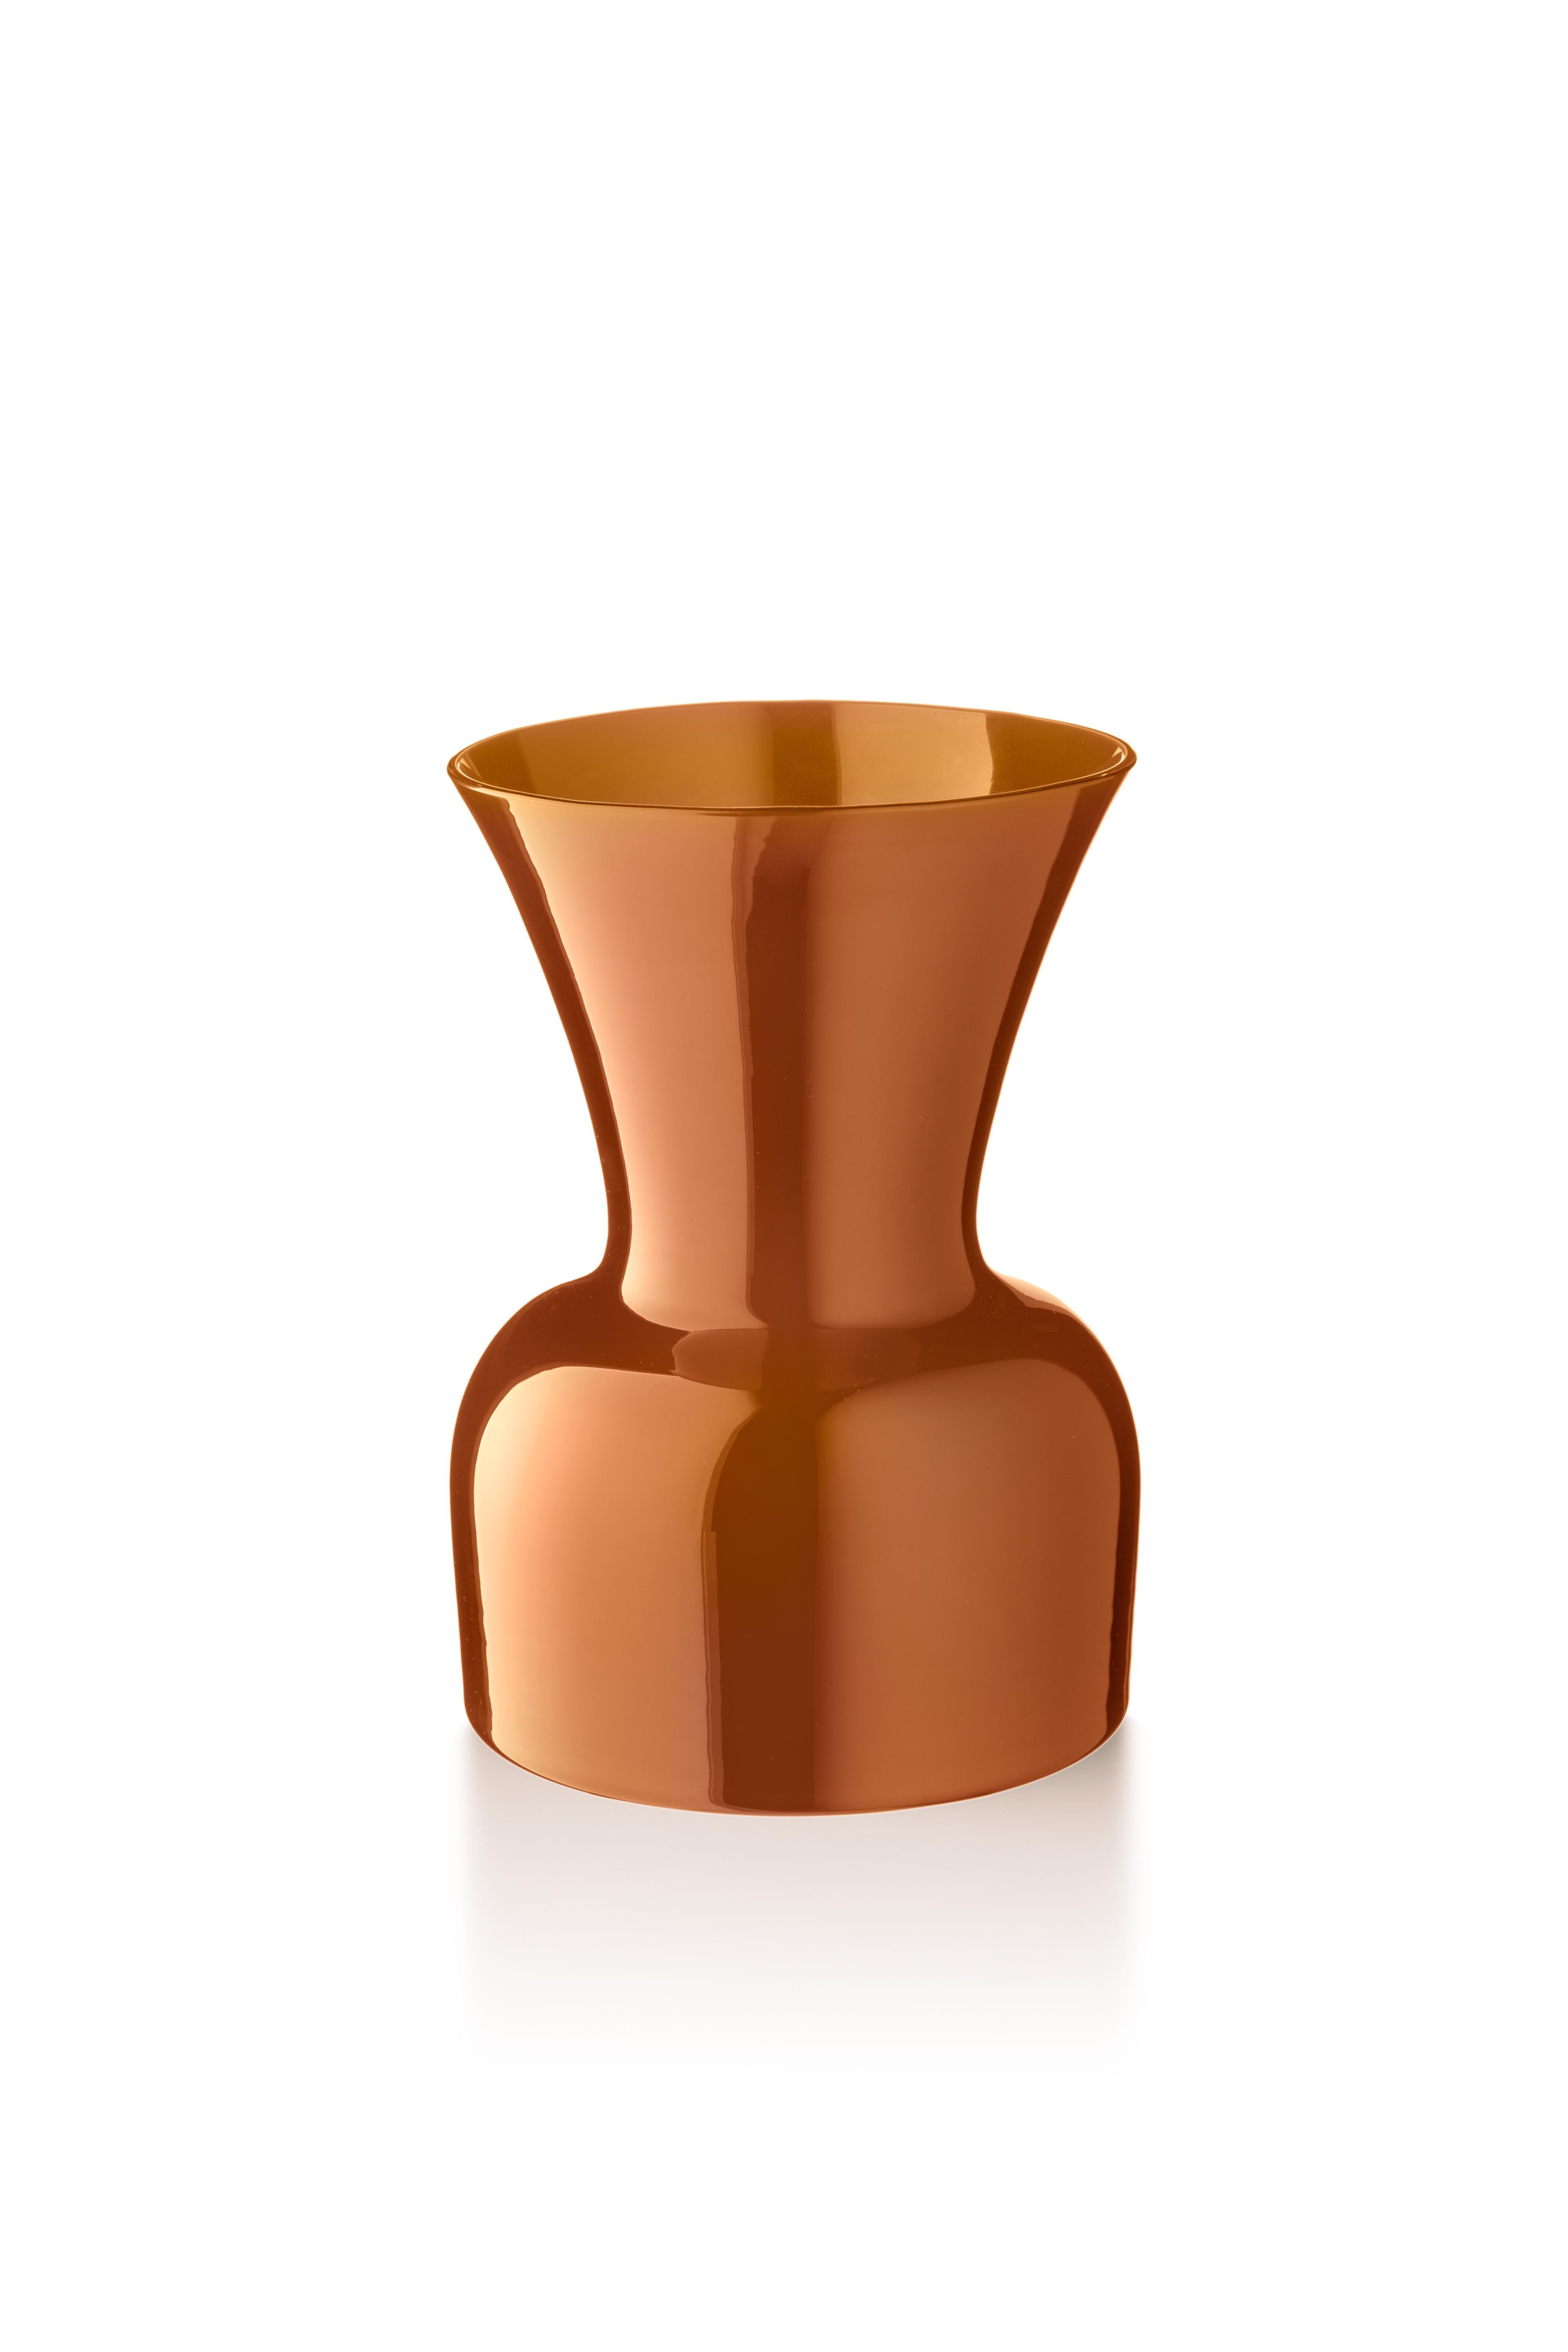 Brown (10067) Medium Profili Daisy Murano Glass Vase by Anna Gili